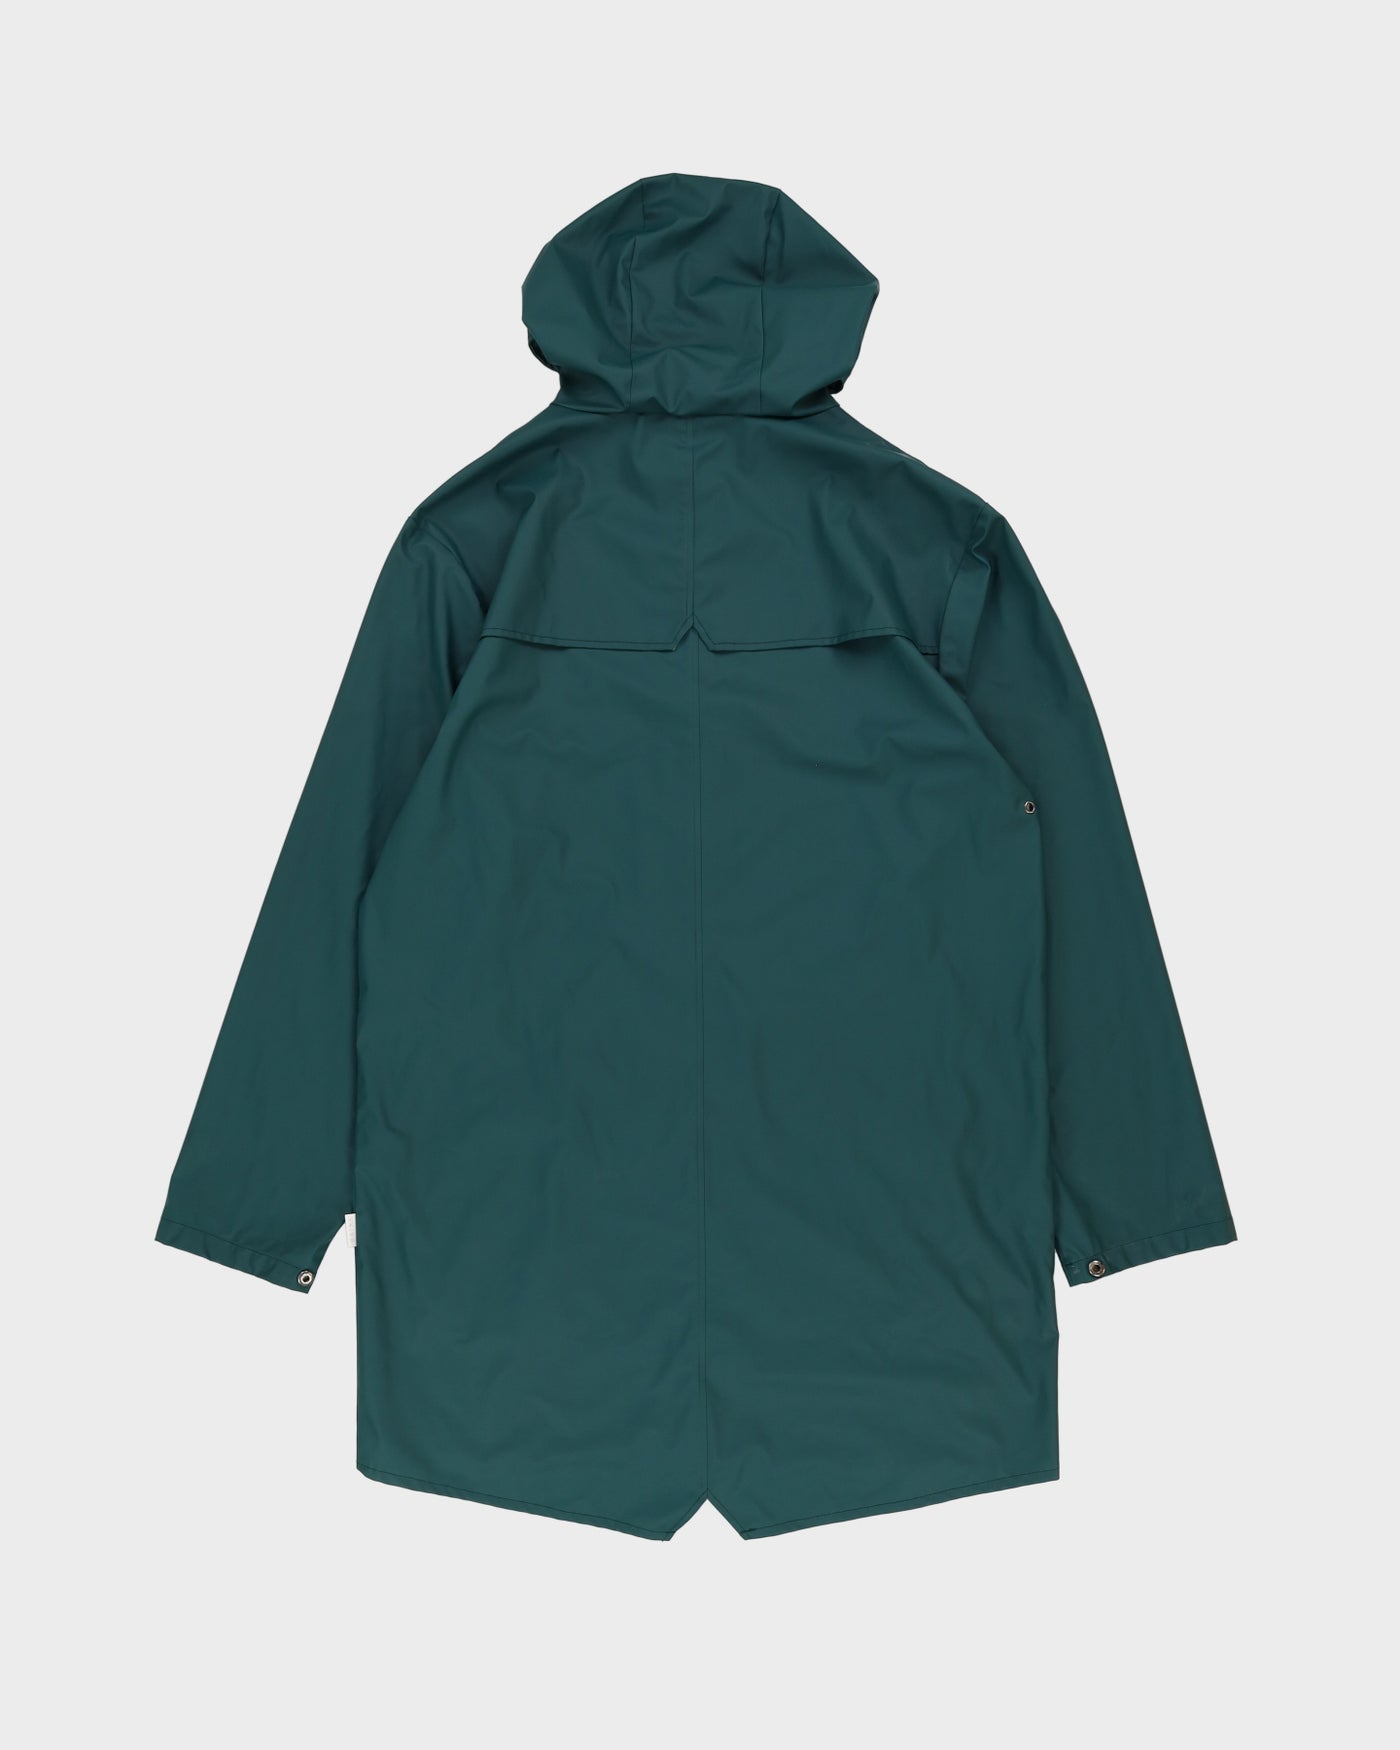 Rains Green Long Hooded Rain Jacket - M / L